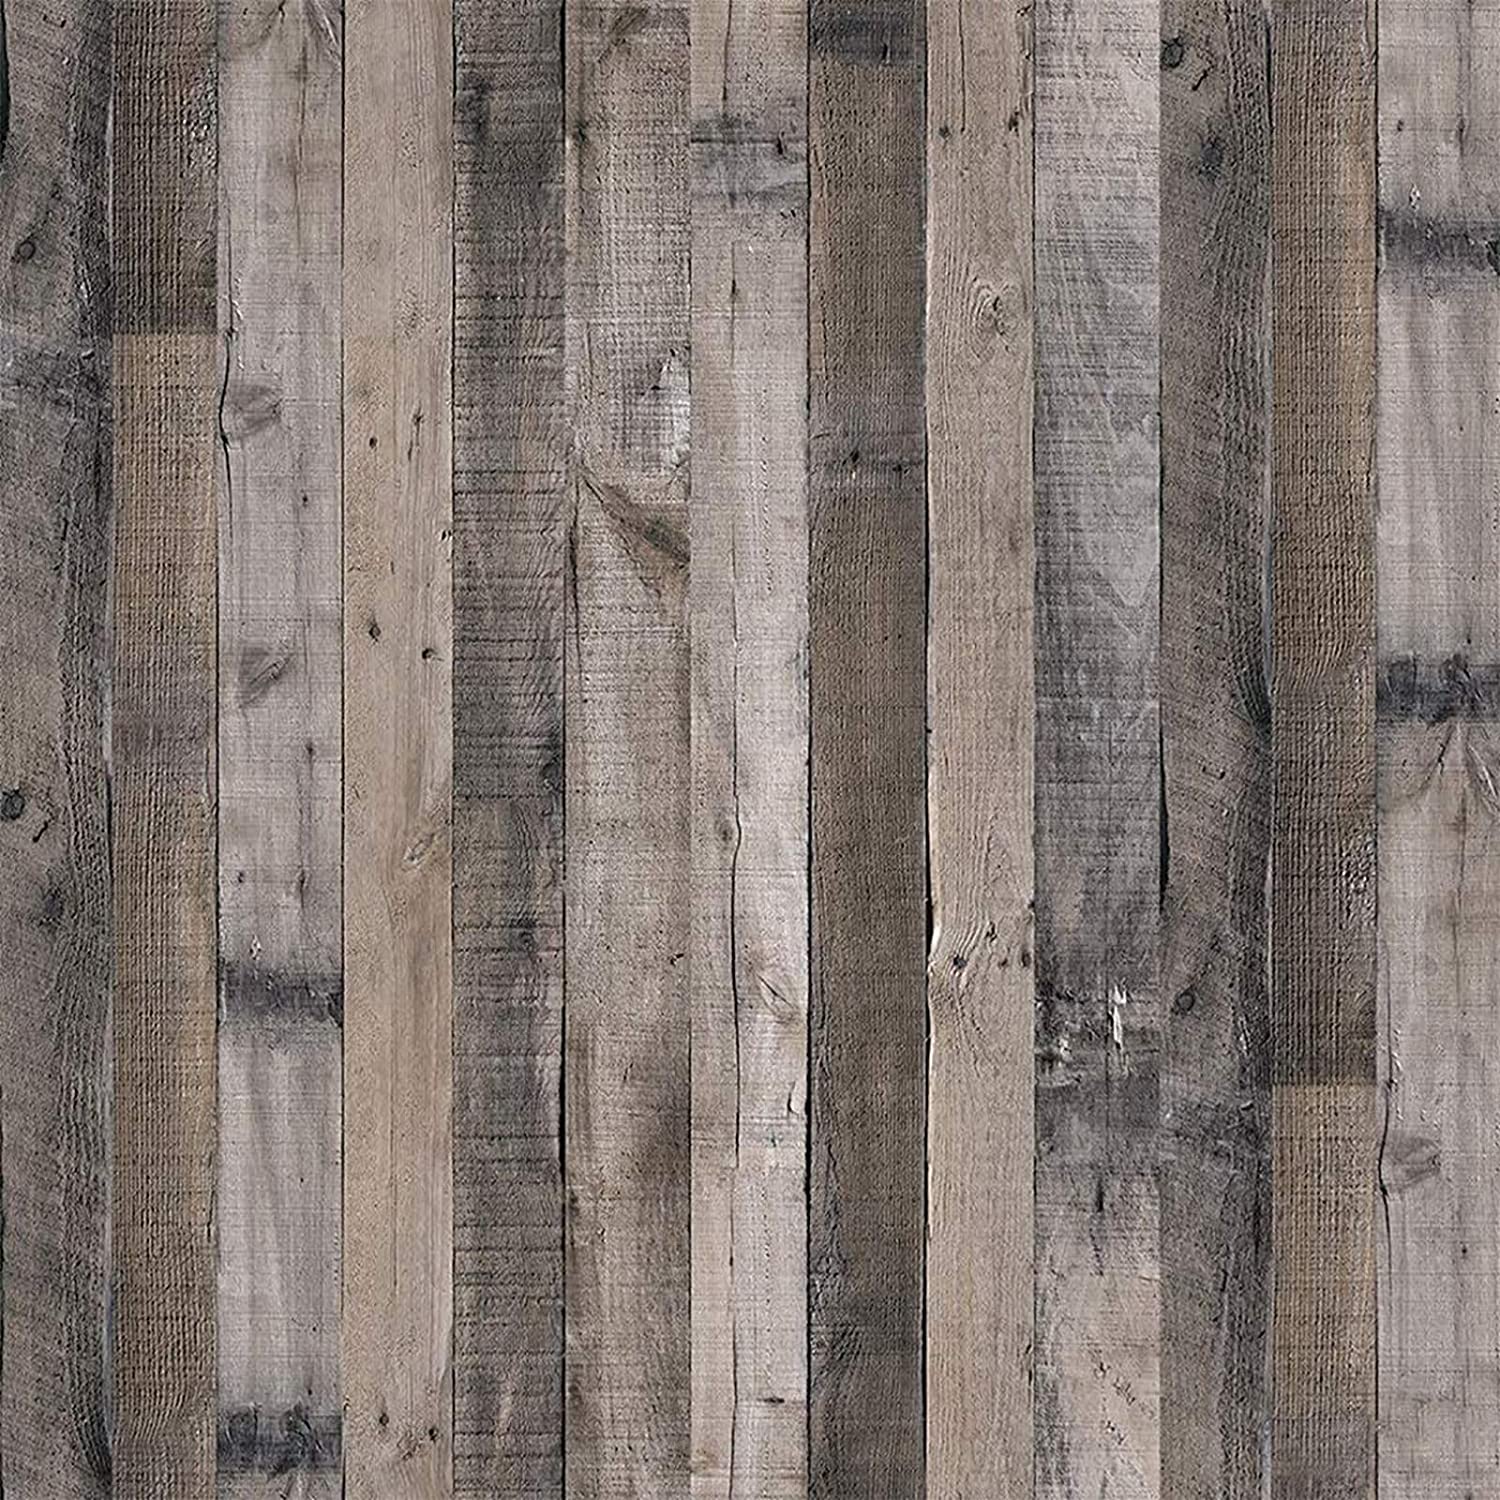 Gray Wood Wallpaper Wood Peel and Stick Wallpaper 17.7”x 118.1”Faux Wood Plank Paper Wood Self Adhesive Removable Wall Decorative Reclaimed Wood Look Wallpaper Vinyl Film Shiplap Wood Panel Wallpaper